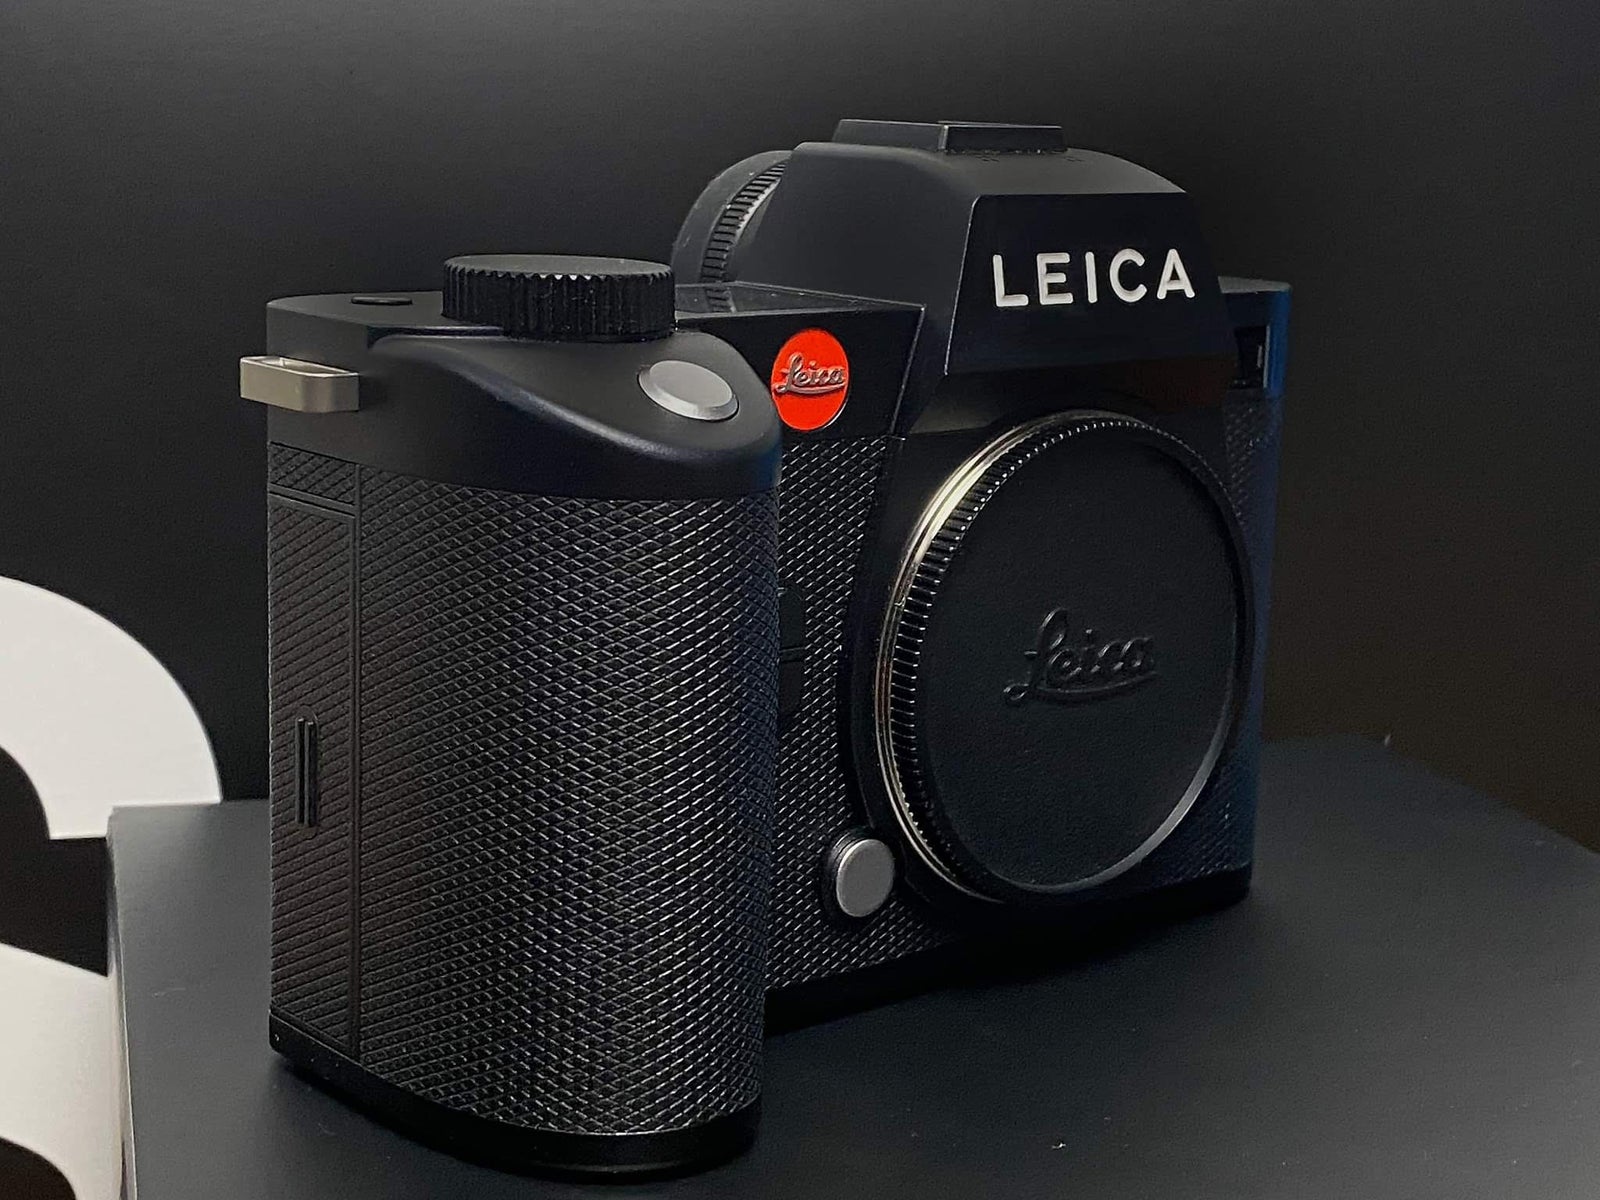 Leica, LEICA SL2 + 24-70 ASPH., 47 megapixels